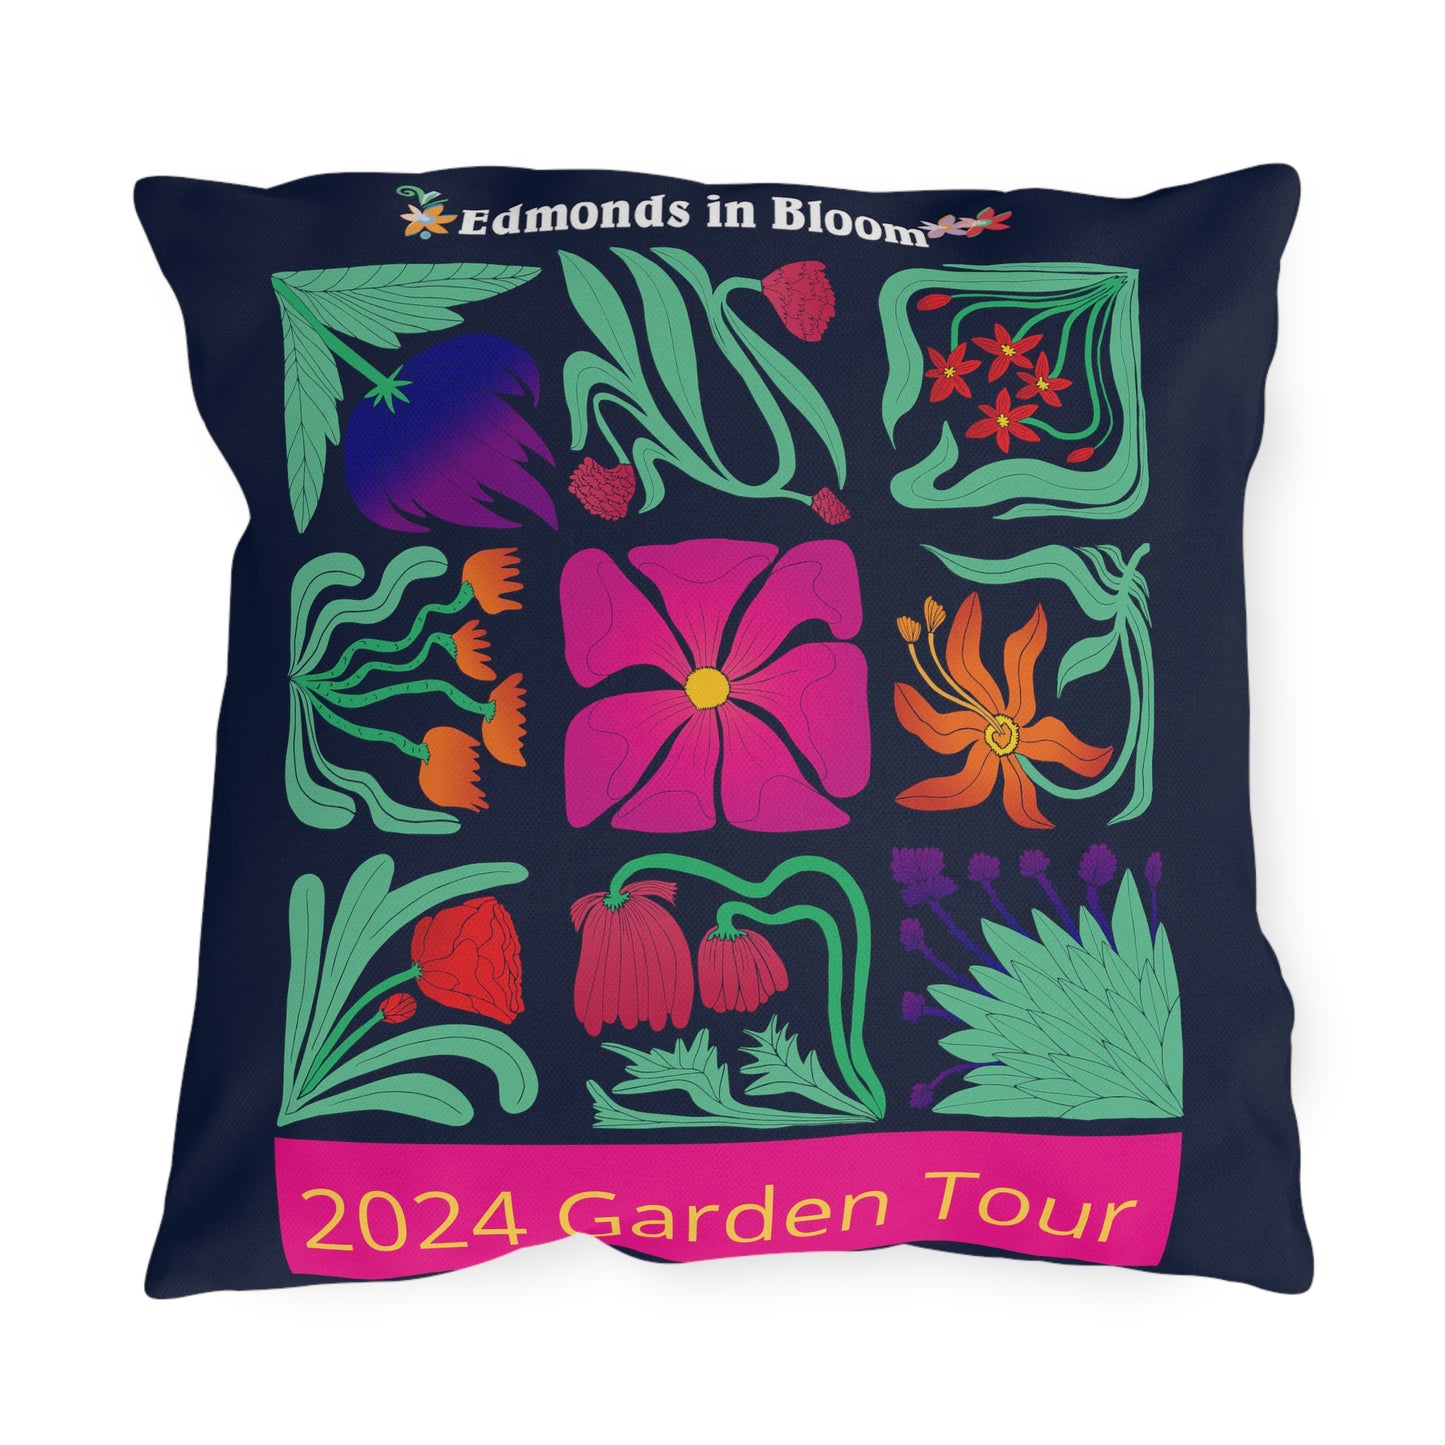 Edmonds in Bloom 2024 Garden Tour Outdoor Pillows (Single Side Print)